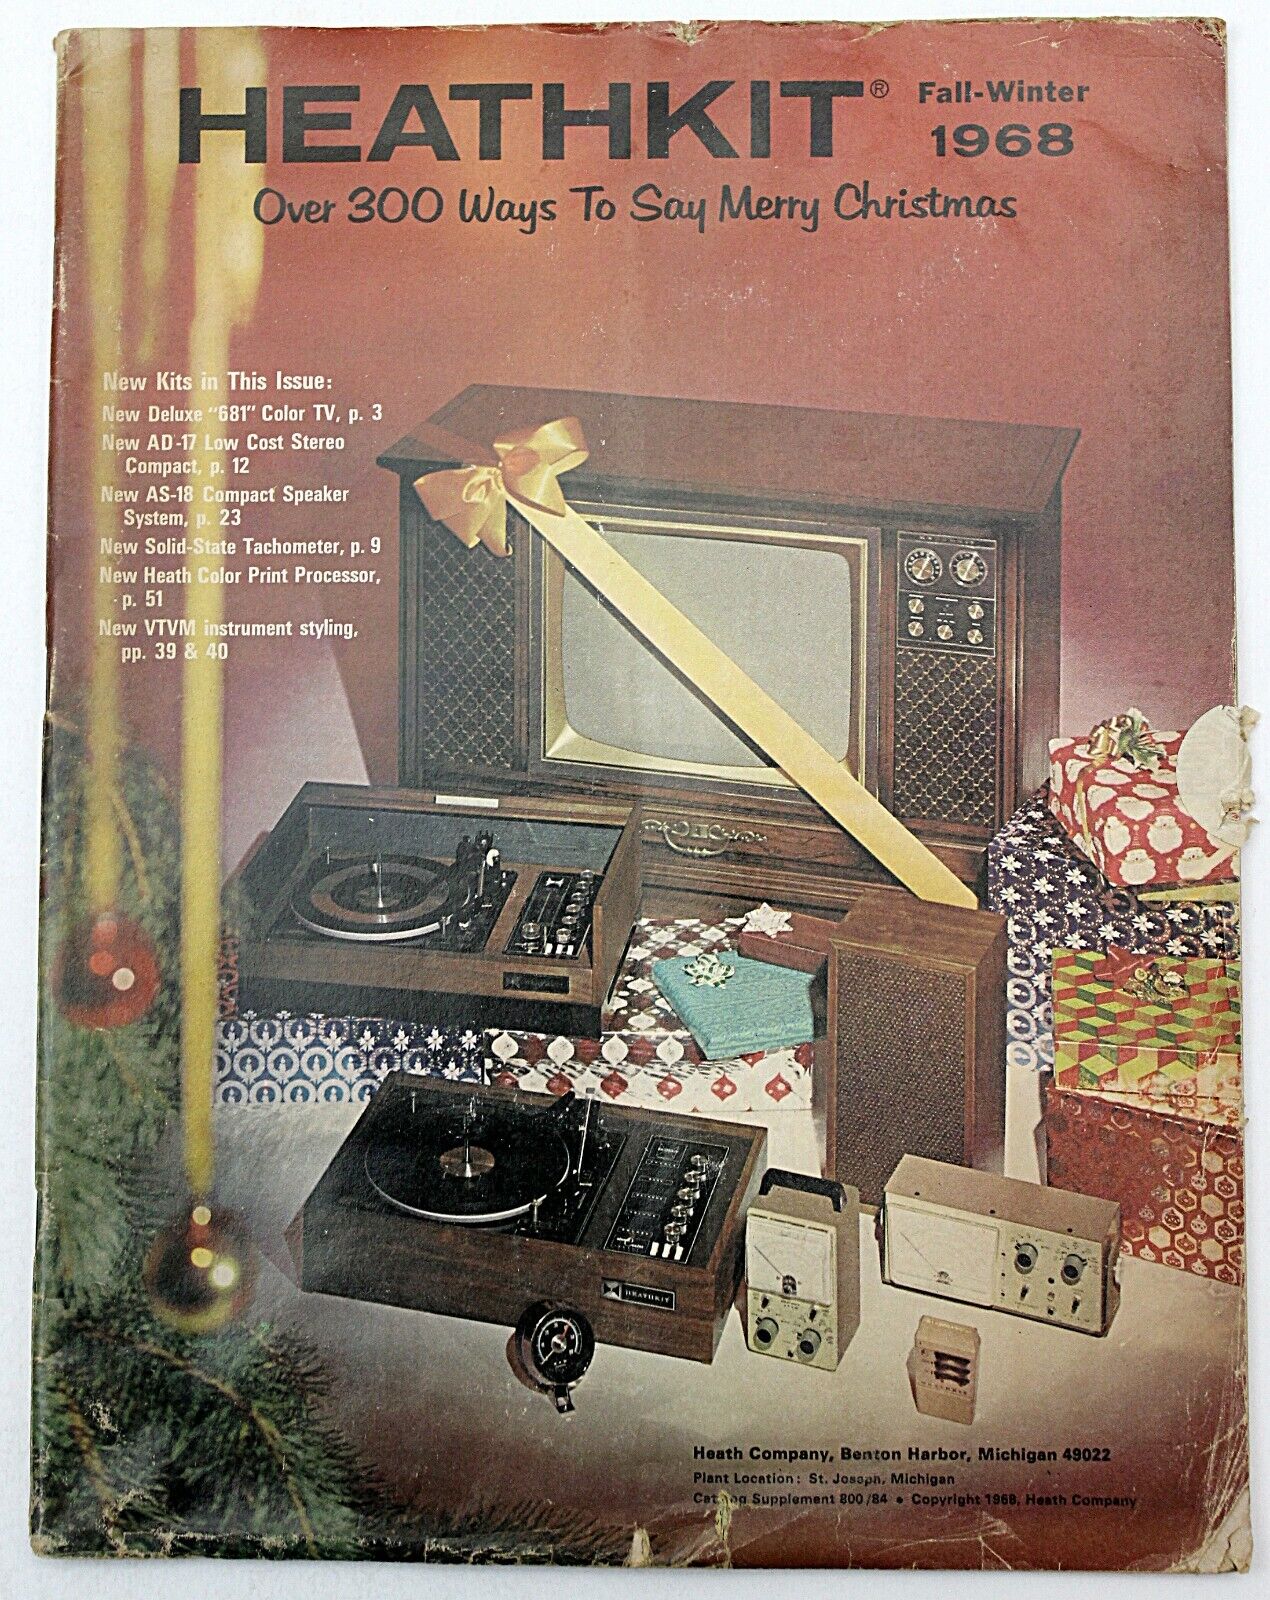 Heathkit Fall/Winter 1968 Christmas Catalog TVs, Stereos, Electronics Kits, etc.